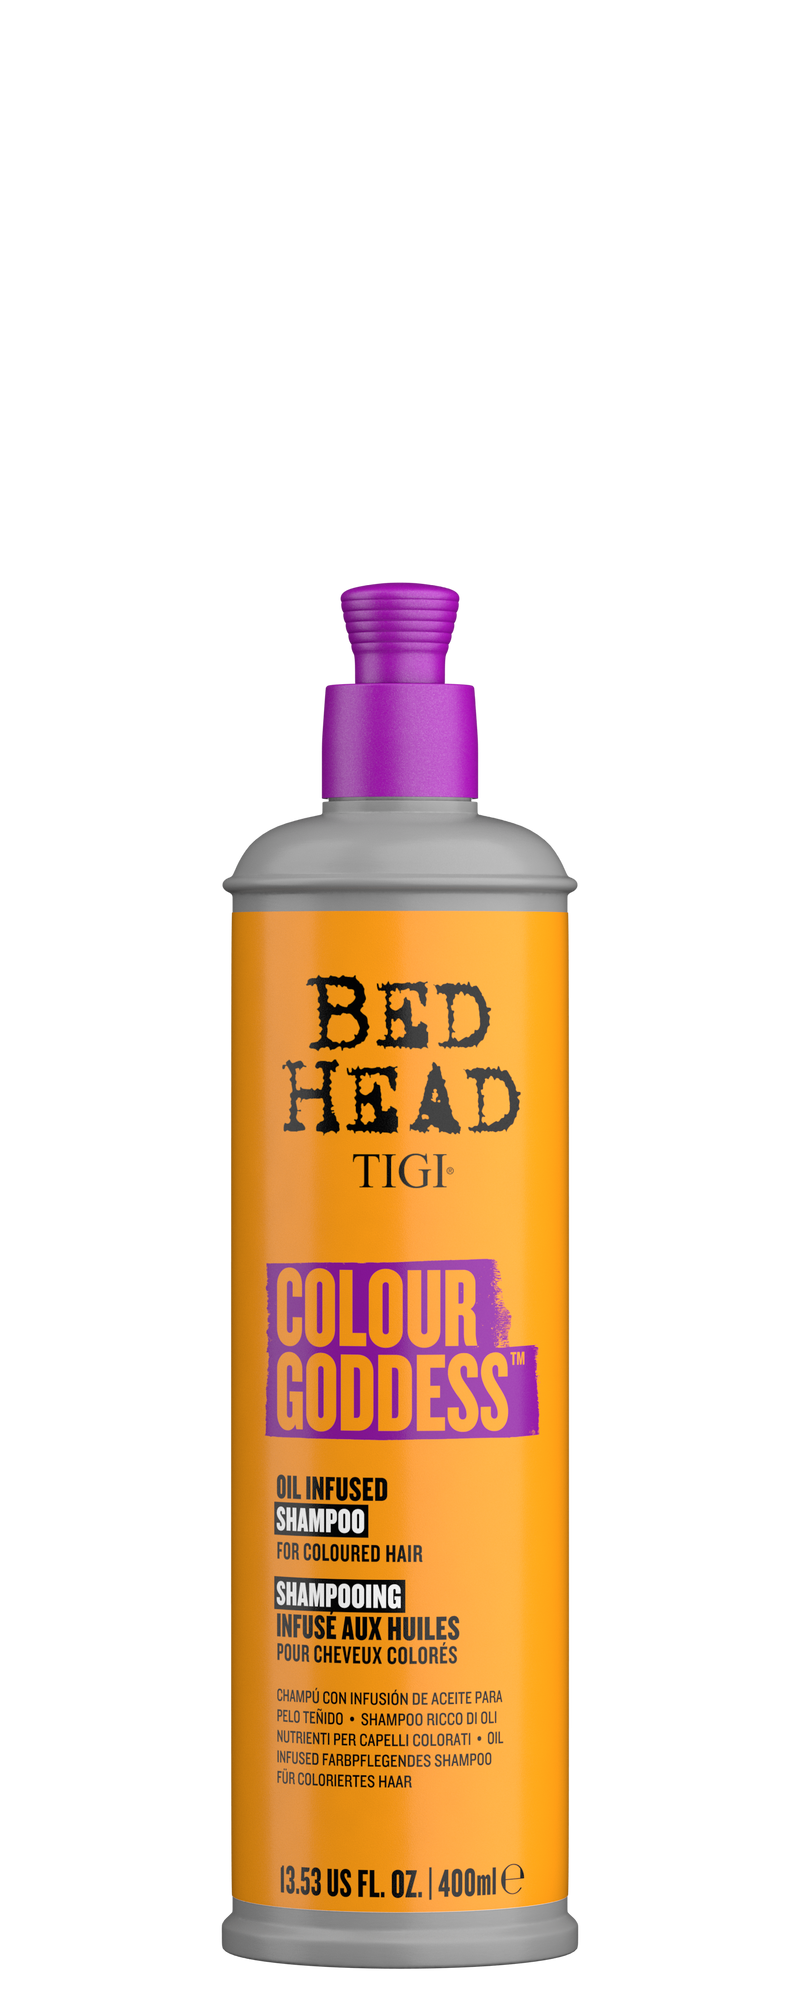 TIGI Shampoo for colored hair